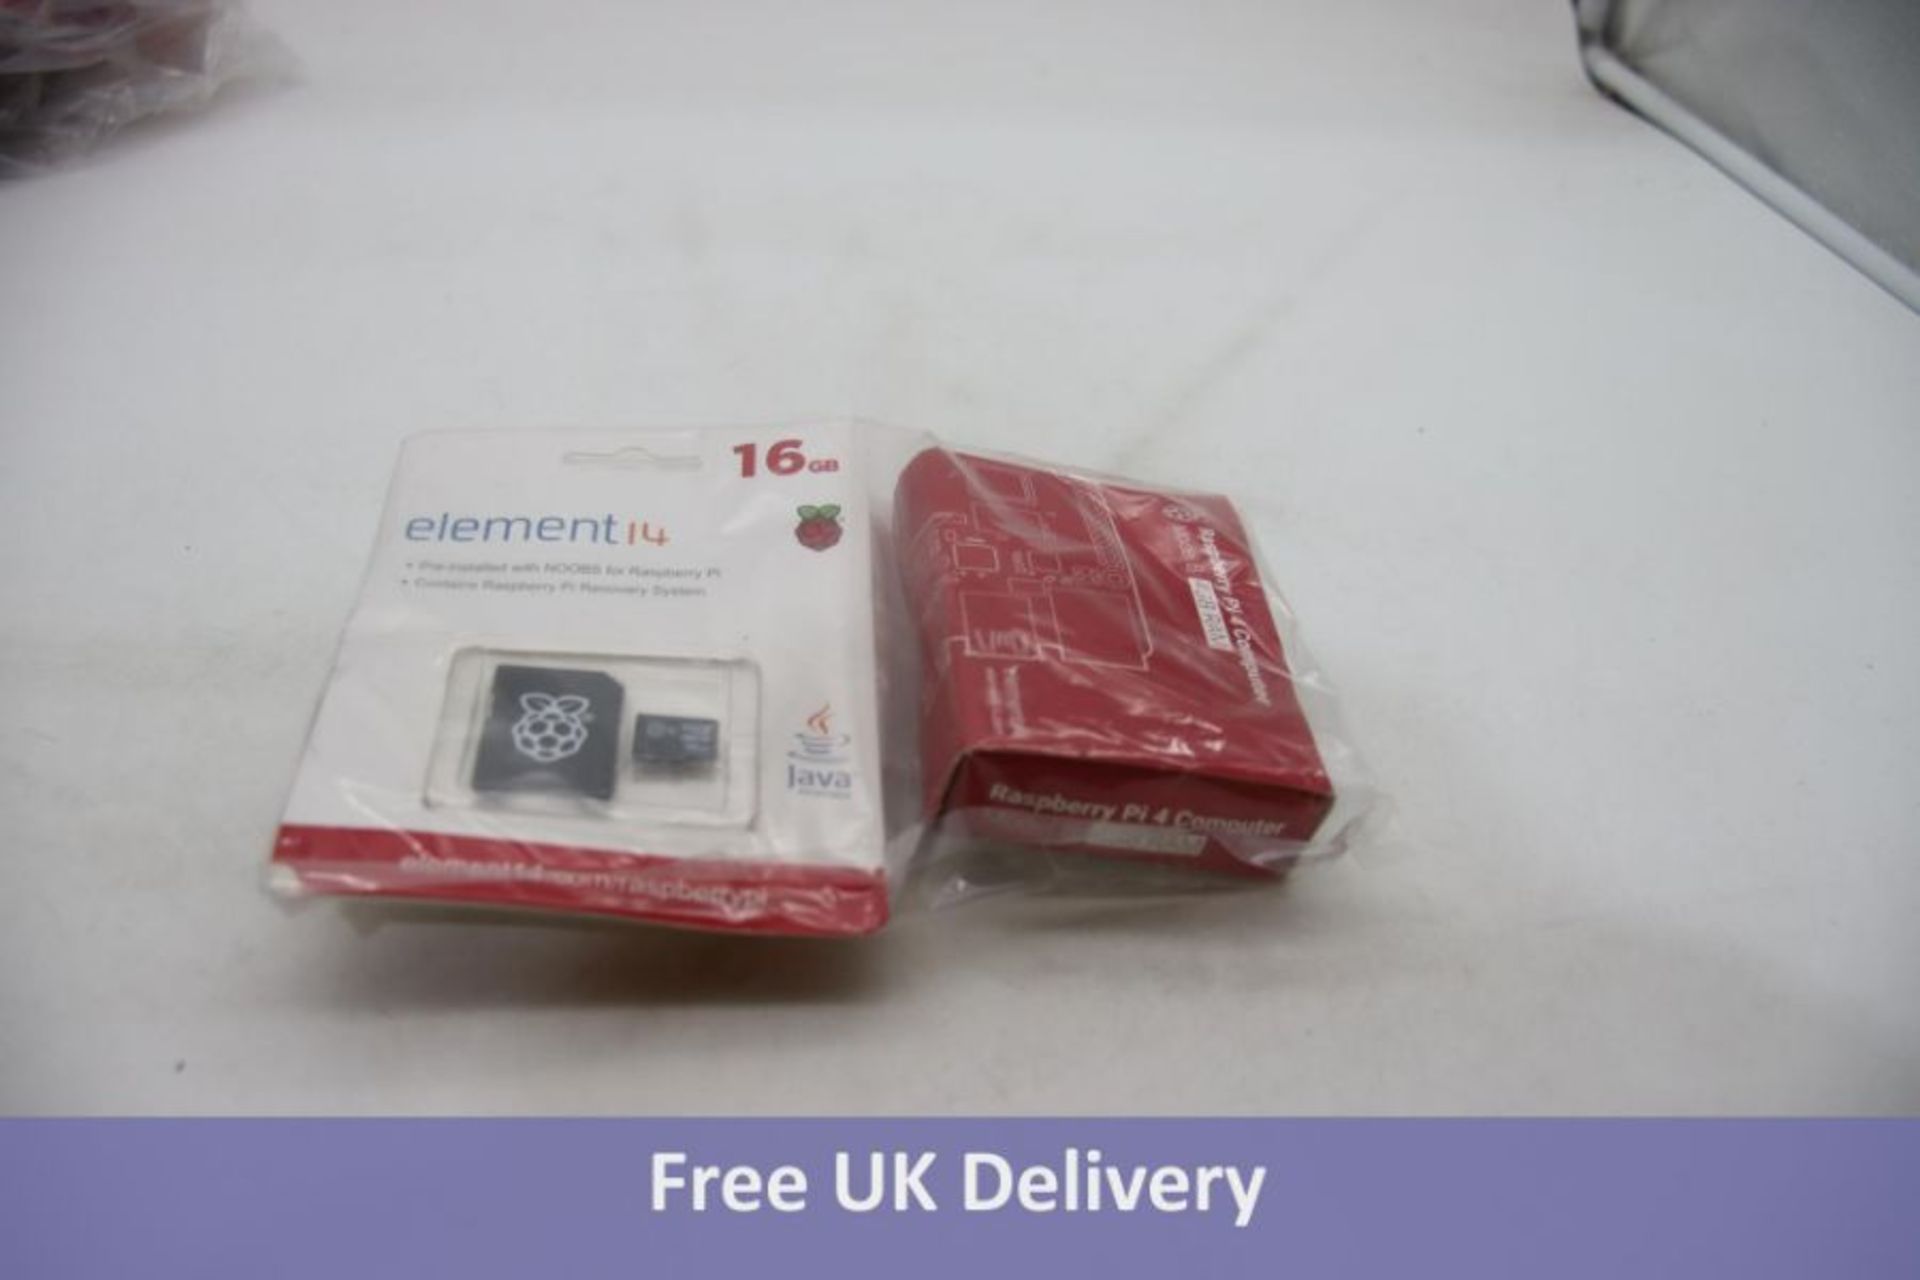 Tw Raspberry Pi items to include 1x Element 14 16 GB Memory and 1x Raspberry Pi 4 Model B 4GB Board